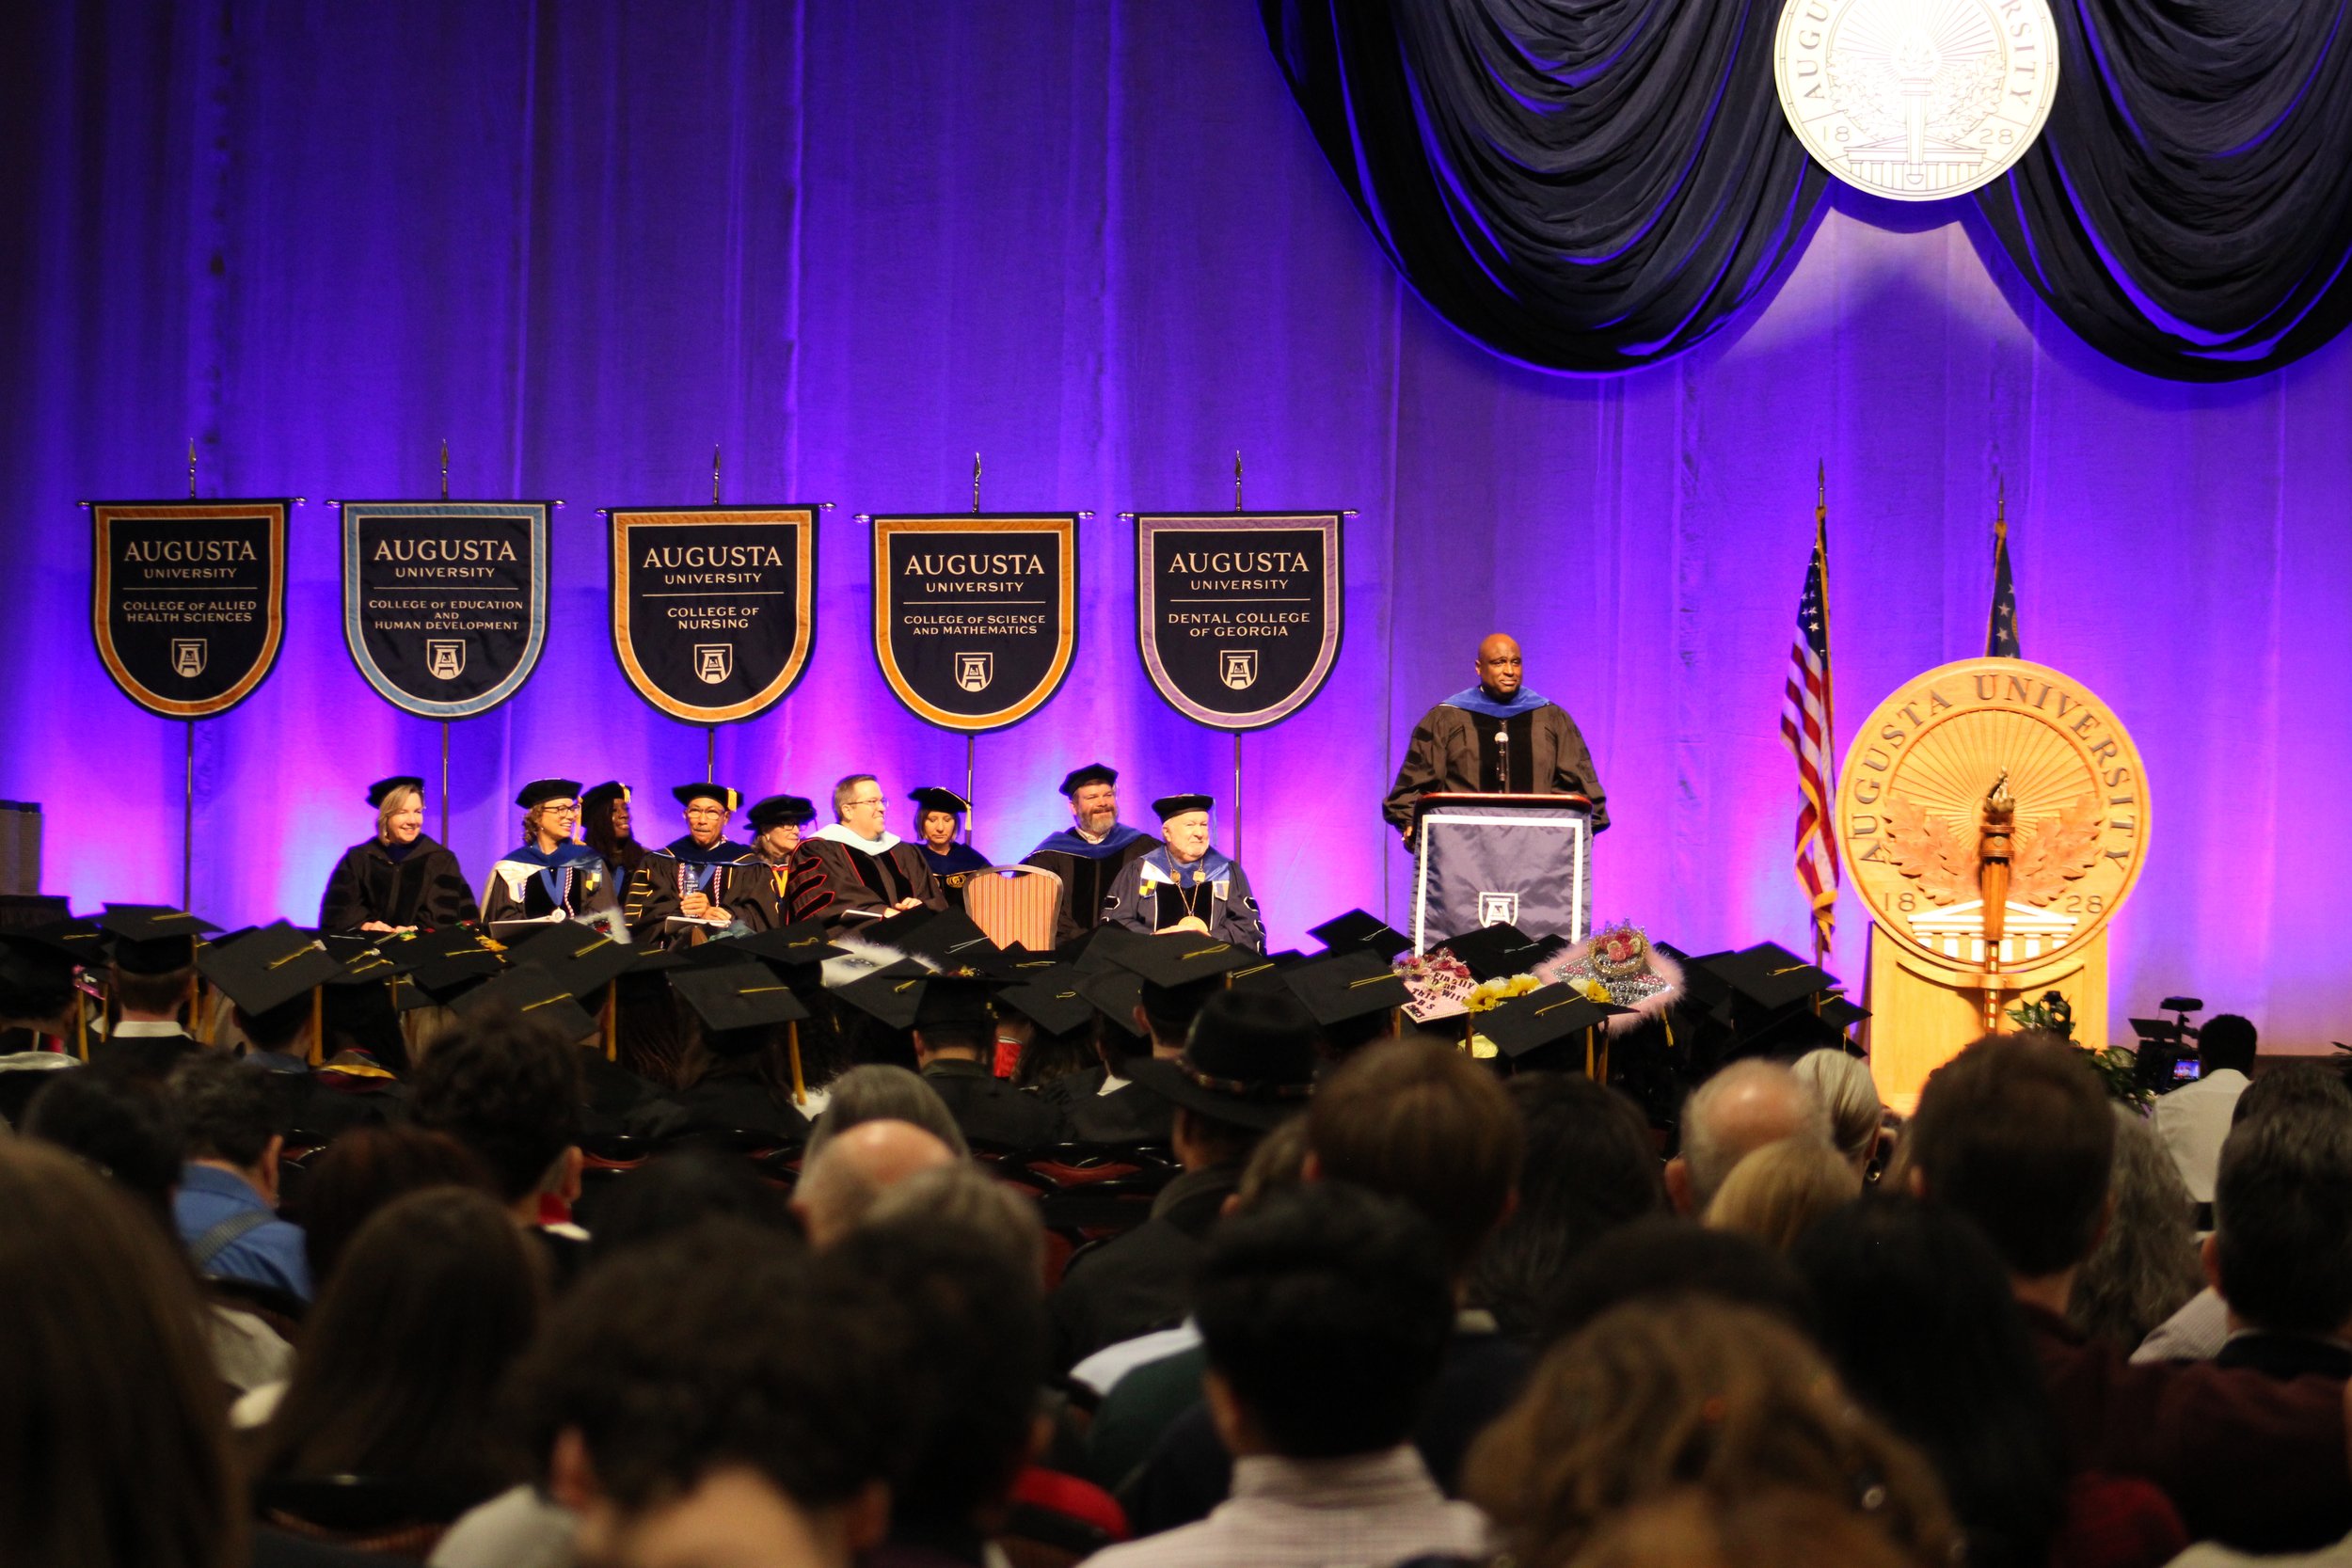  Keynote speaker for undergraduate commencement ceremony Rodney Bullard.  (photo by Rakiyah Lenon)  